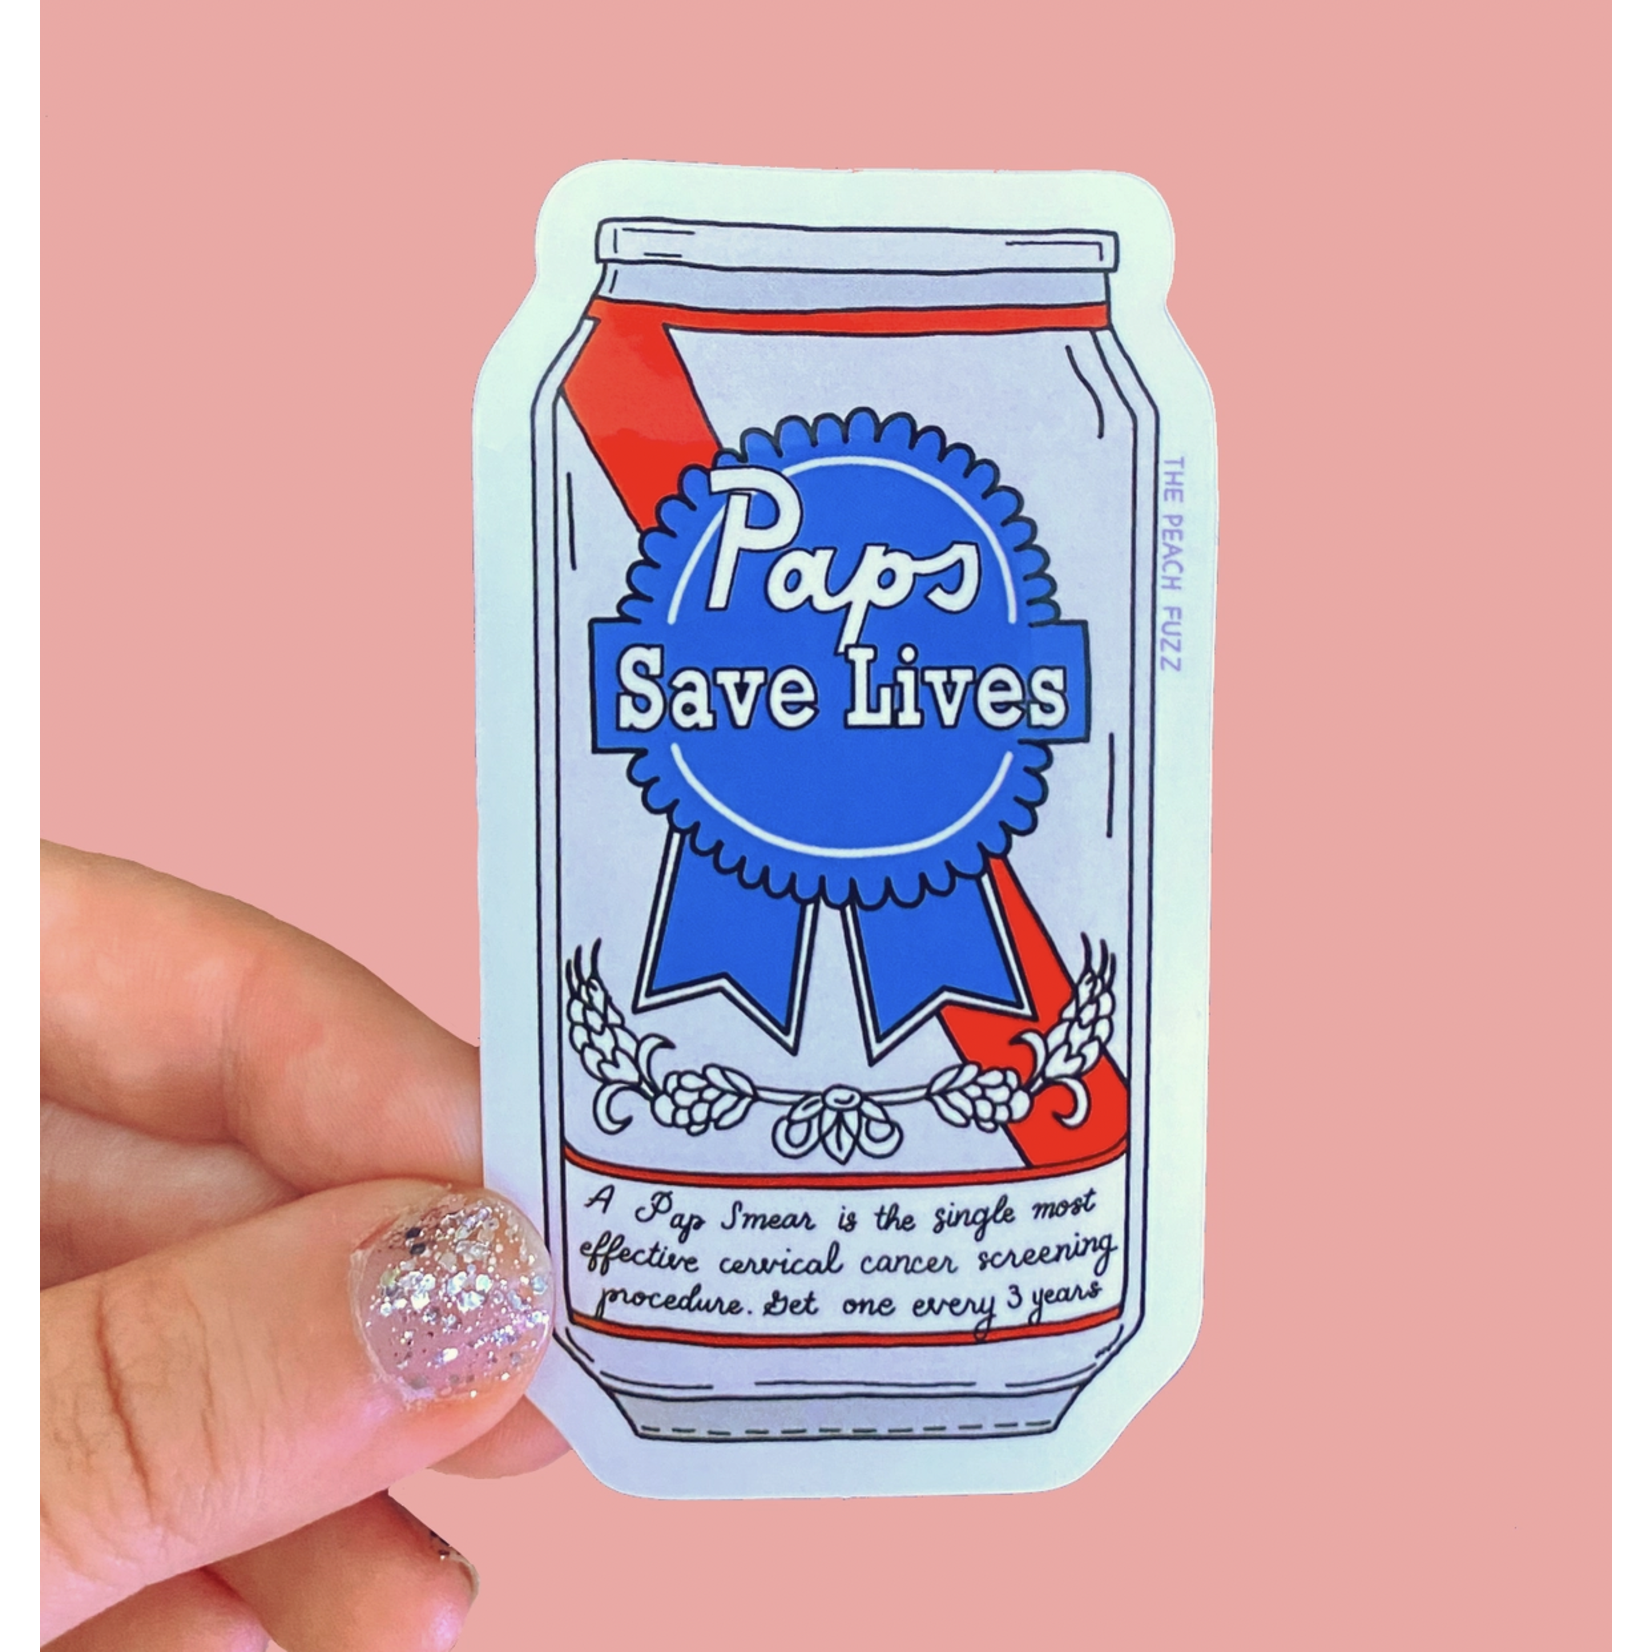 The Peach Fuzz Paps Save Lives Sticker